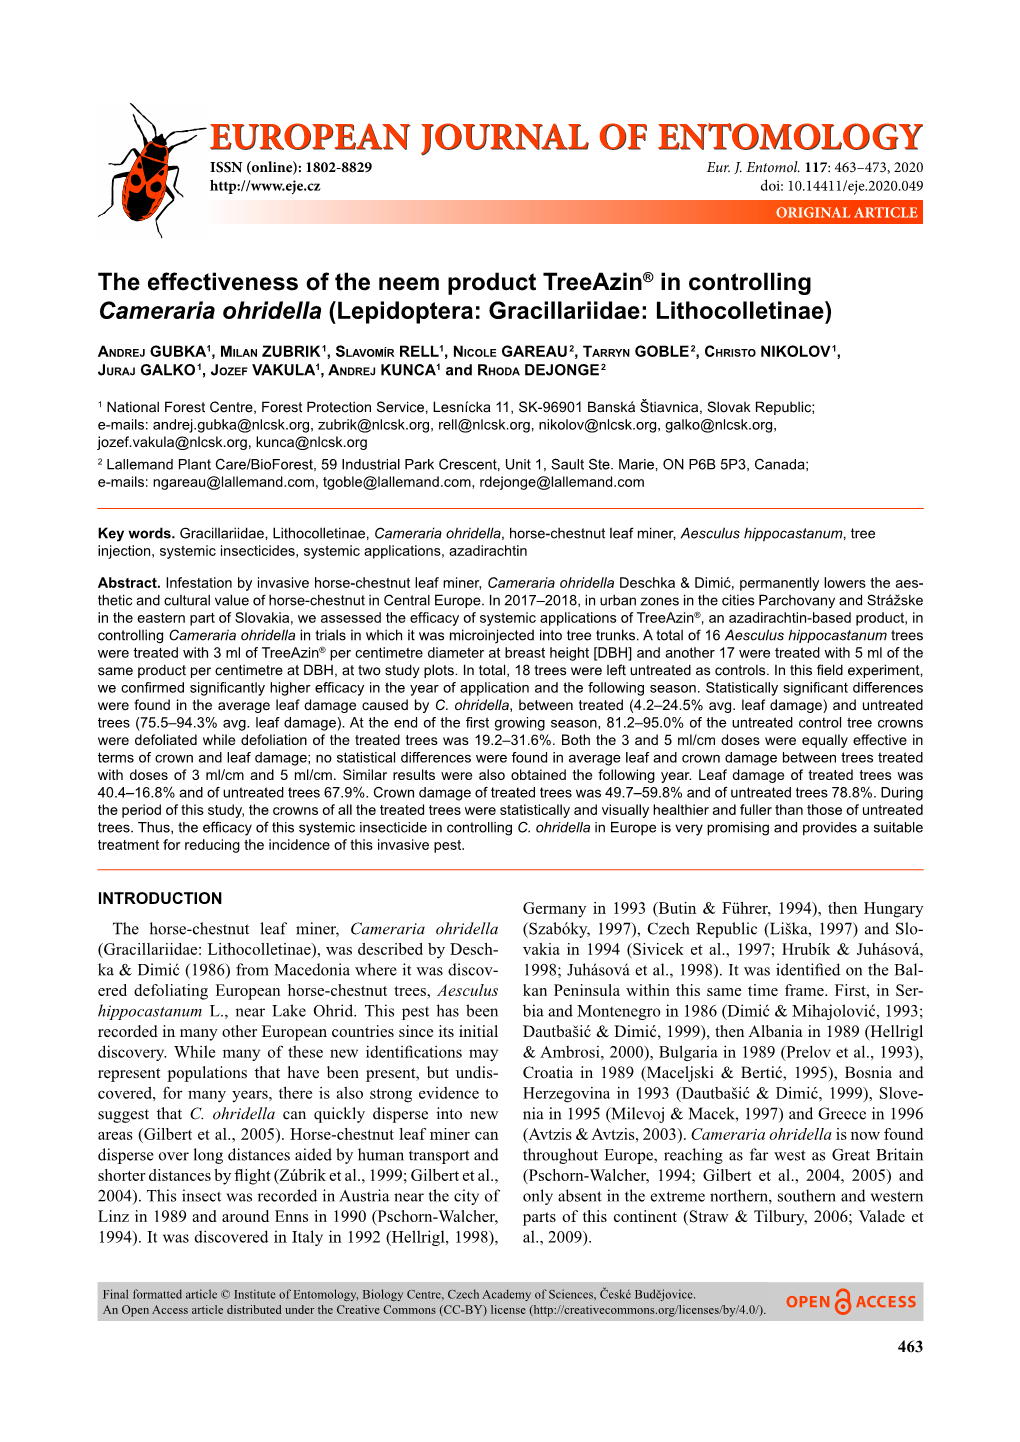 The Effectiveness of the Neem Product Treeazin® in Controlling Cameraria Ohridella (Lepidoptera: Gracillariidae: Lithocolletinae)